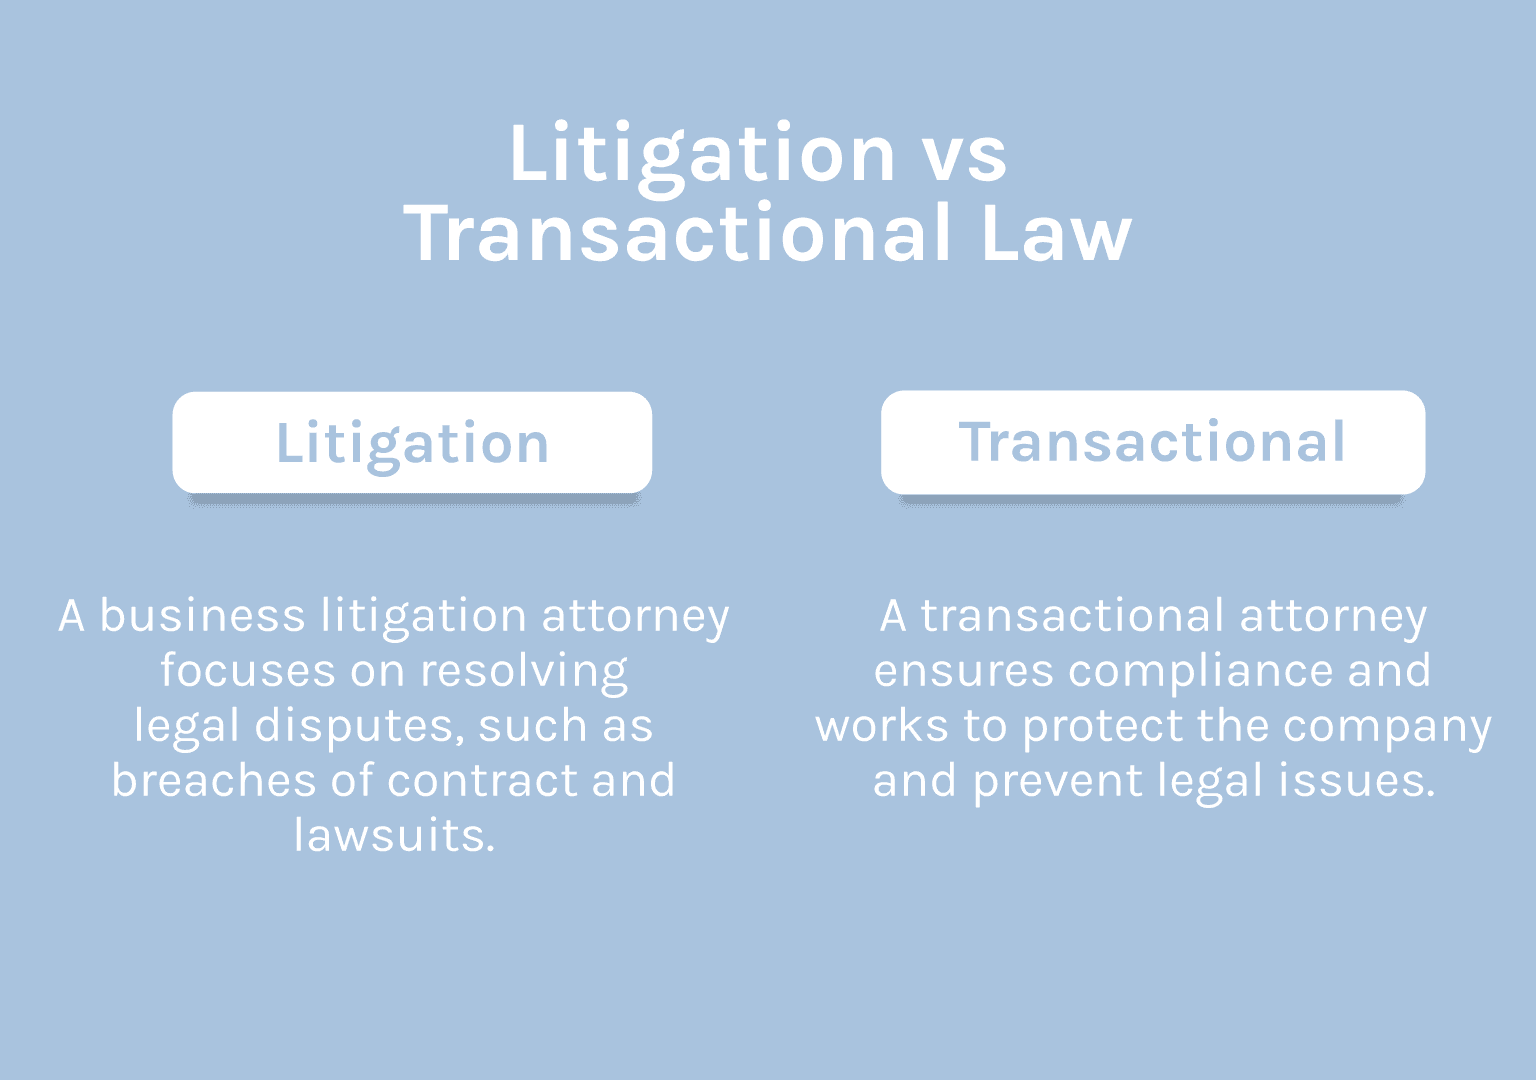 transactional-law-vs-litigation